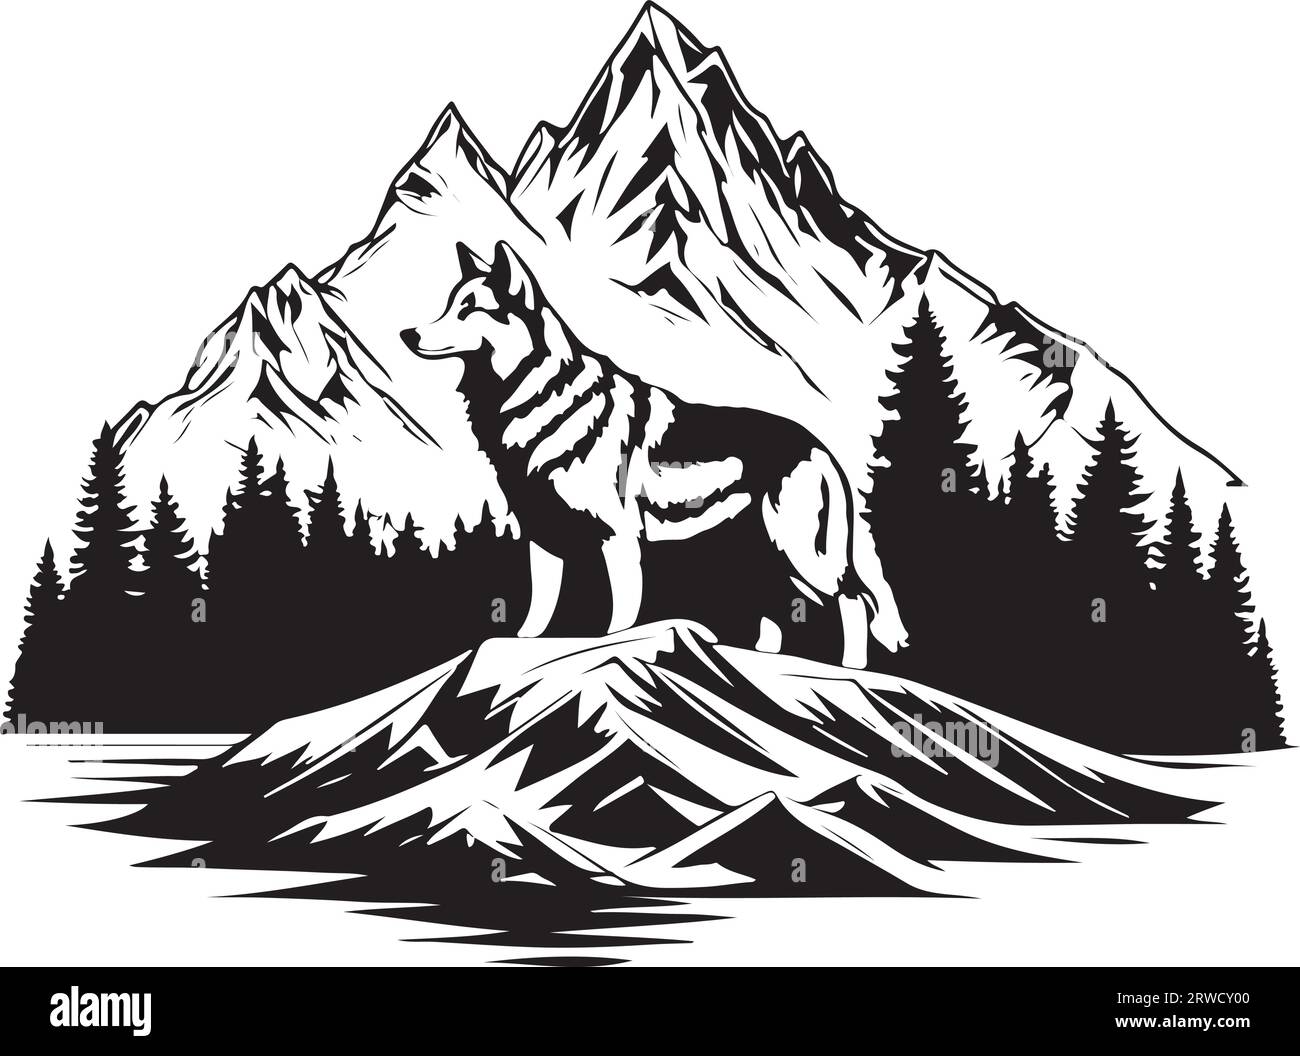 Wonderful and lovely wolf mountain vector art Stock Vector